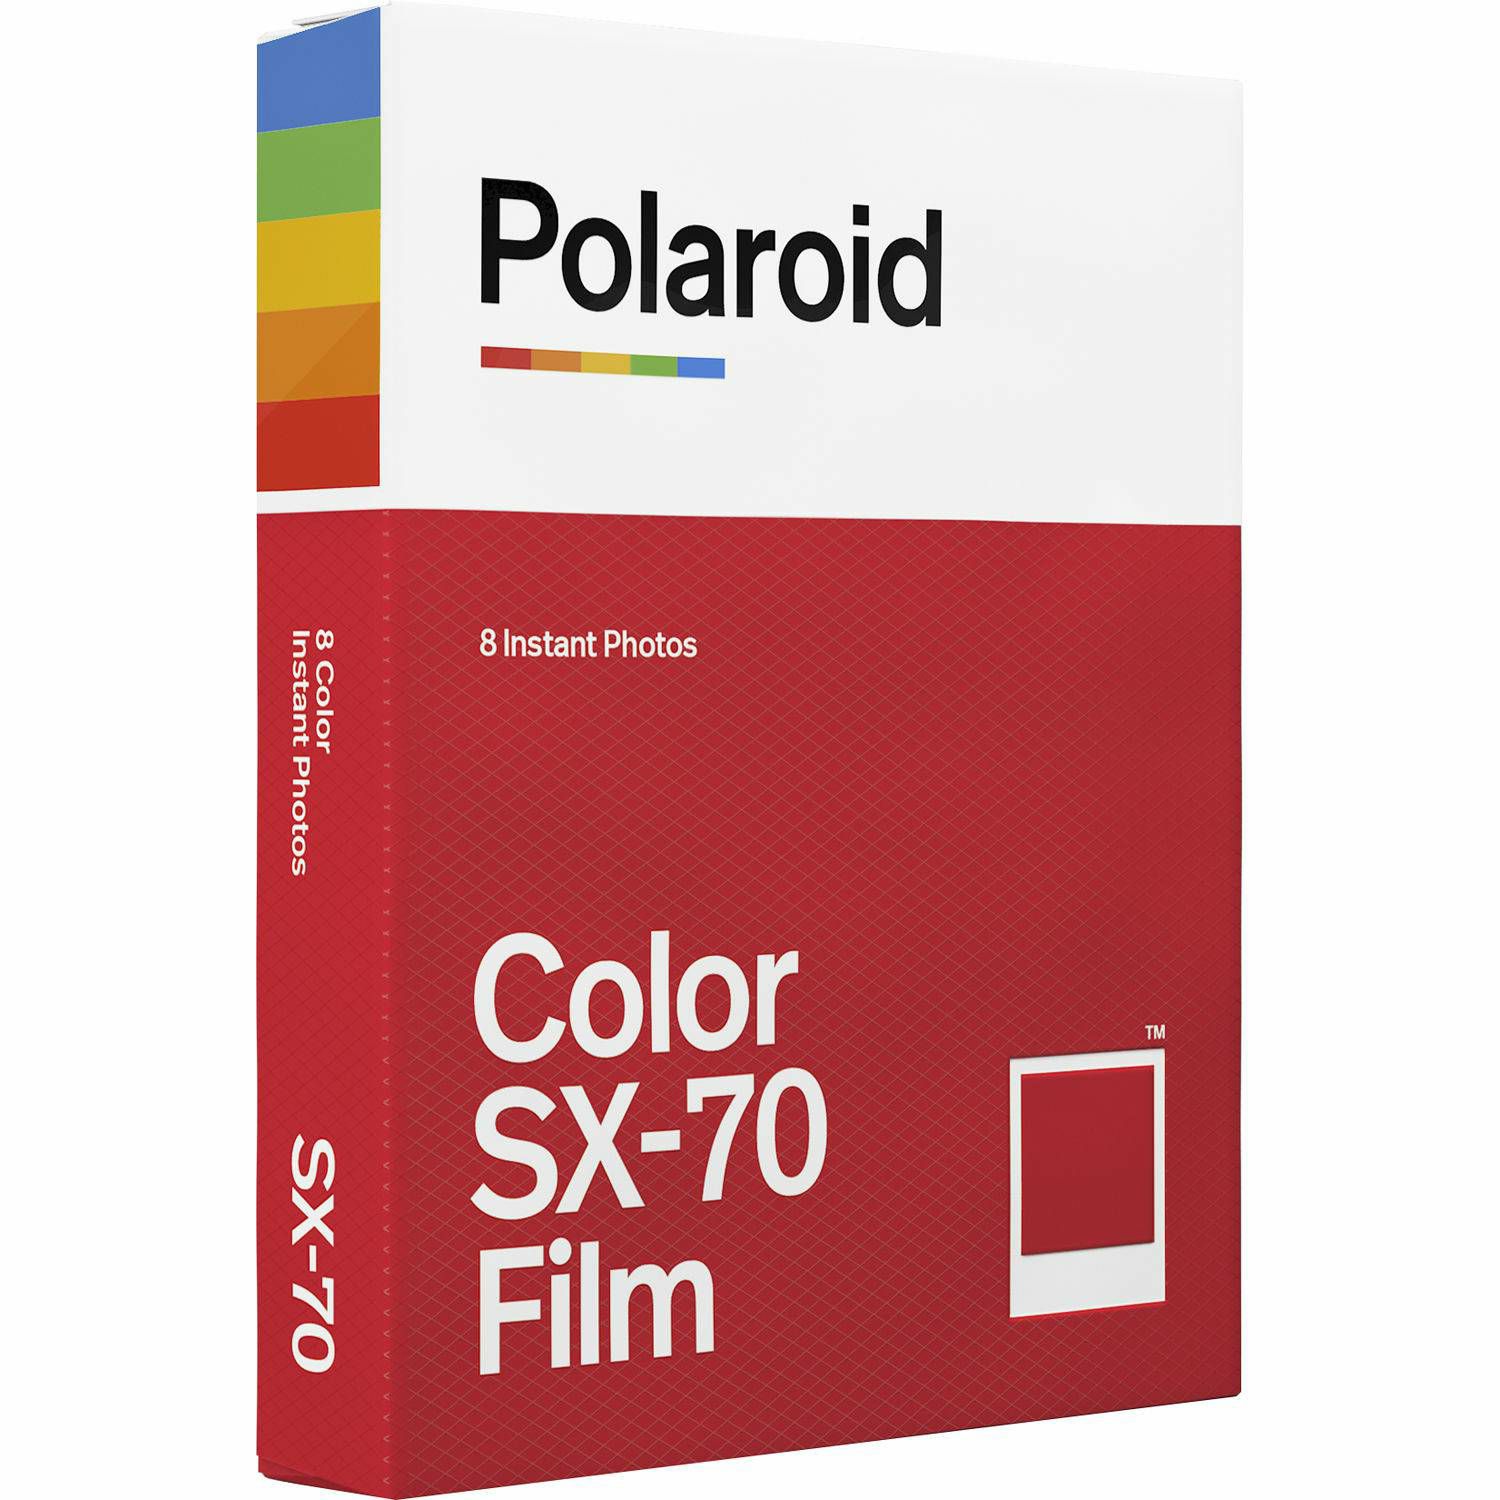 Polaroid Originals Color Film for SX-70 Cameras papir za fotografije u boji za Instant fotoaparate (006004)